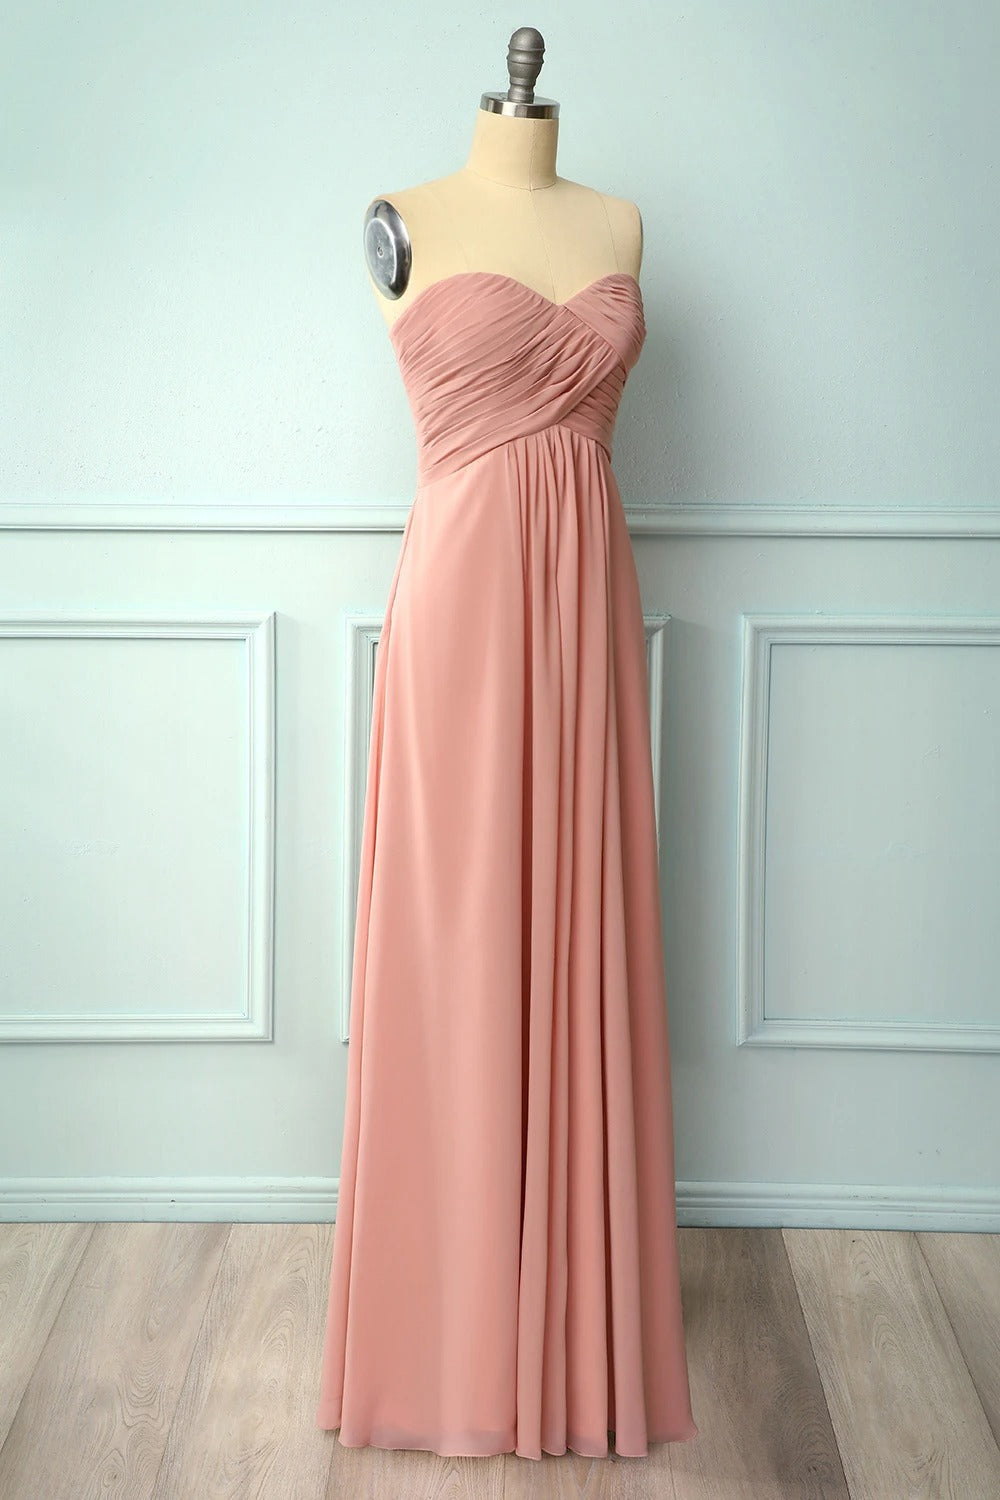 Stylish Outfit, Elegant Sweetheart Pleated Blush Bridesmaid Dress